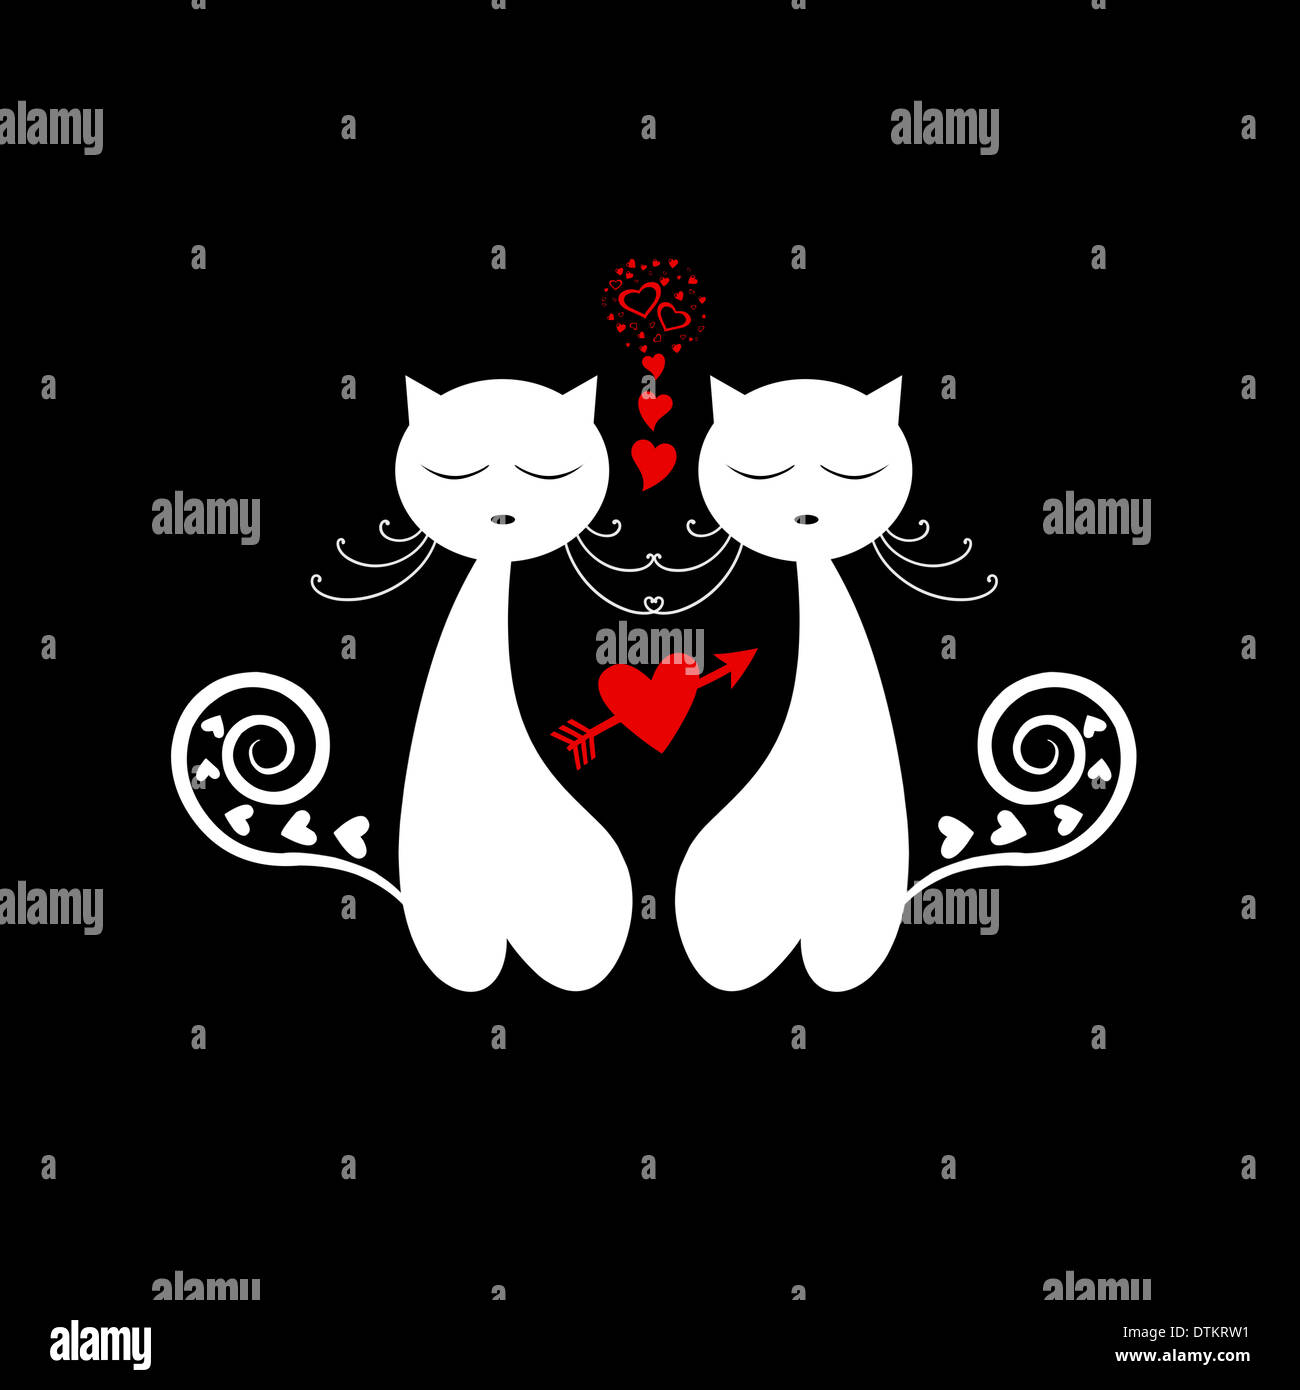 Love Cat Silhouette Stock Photo